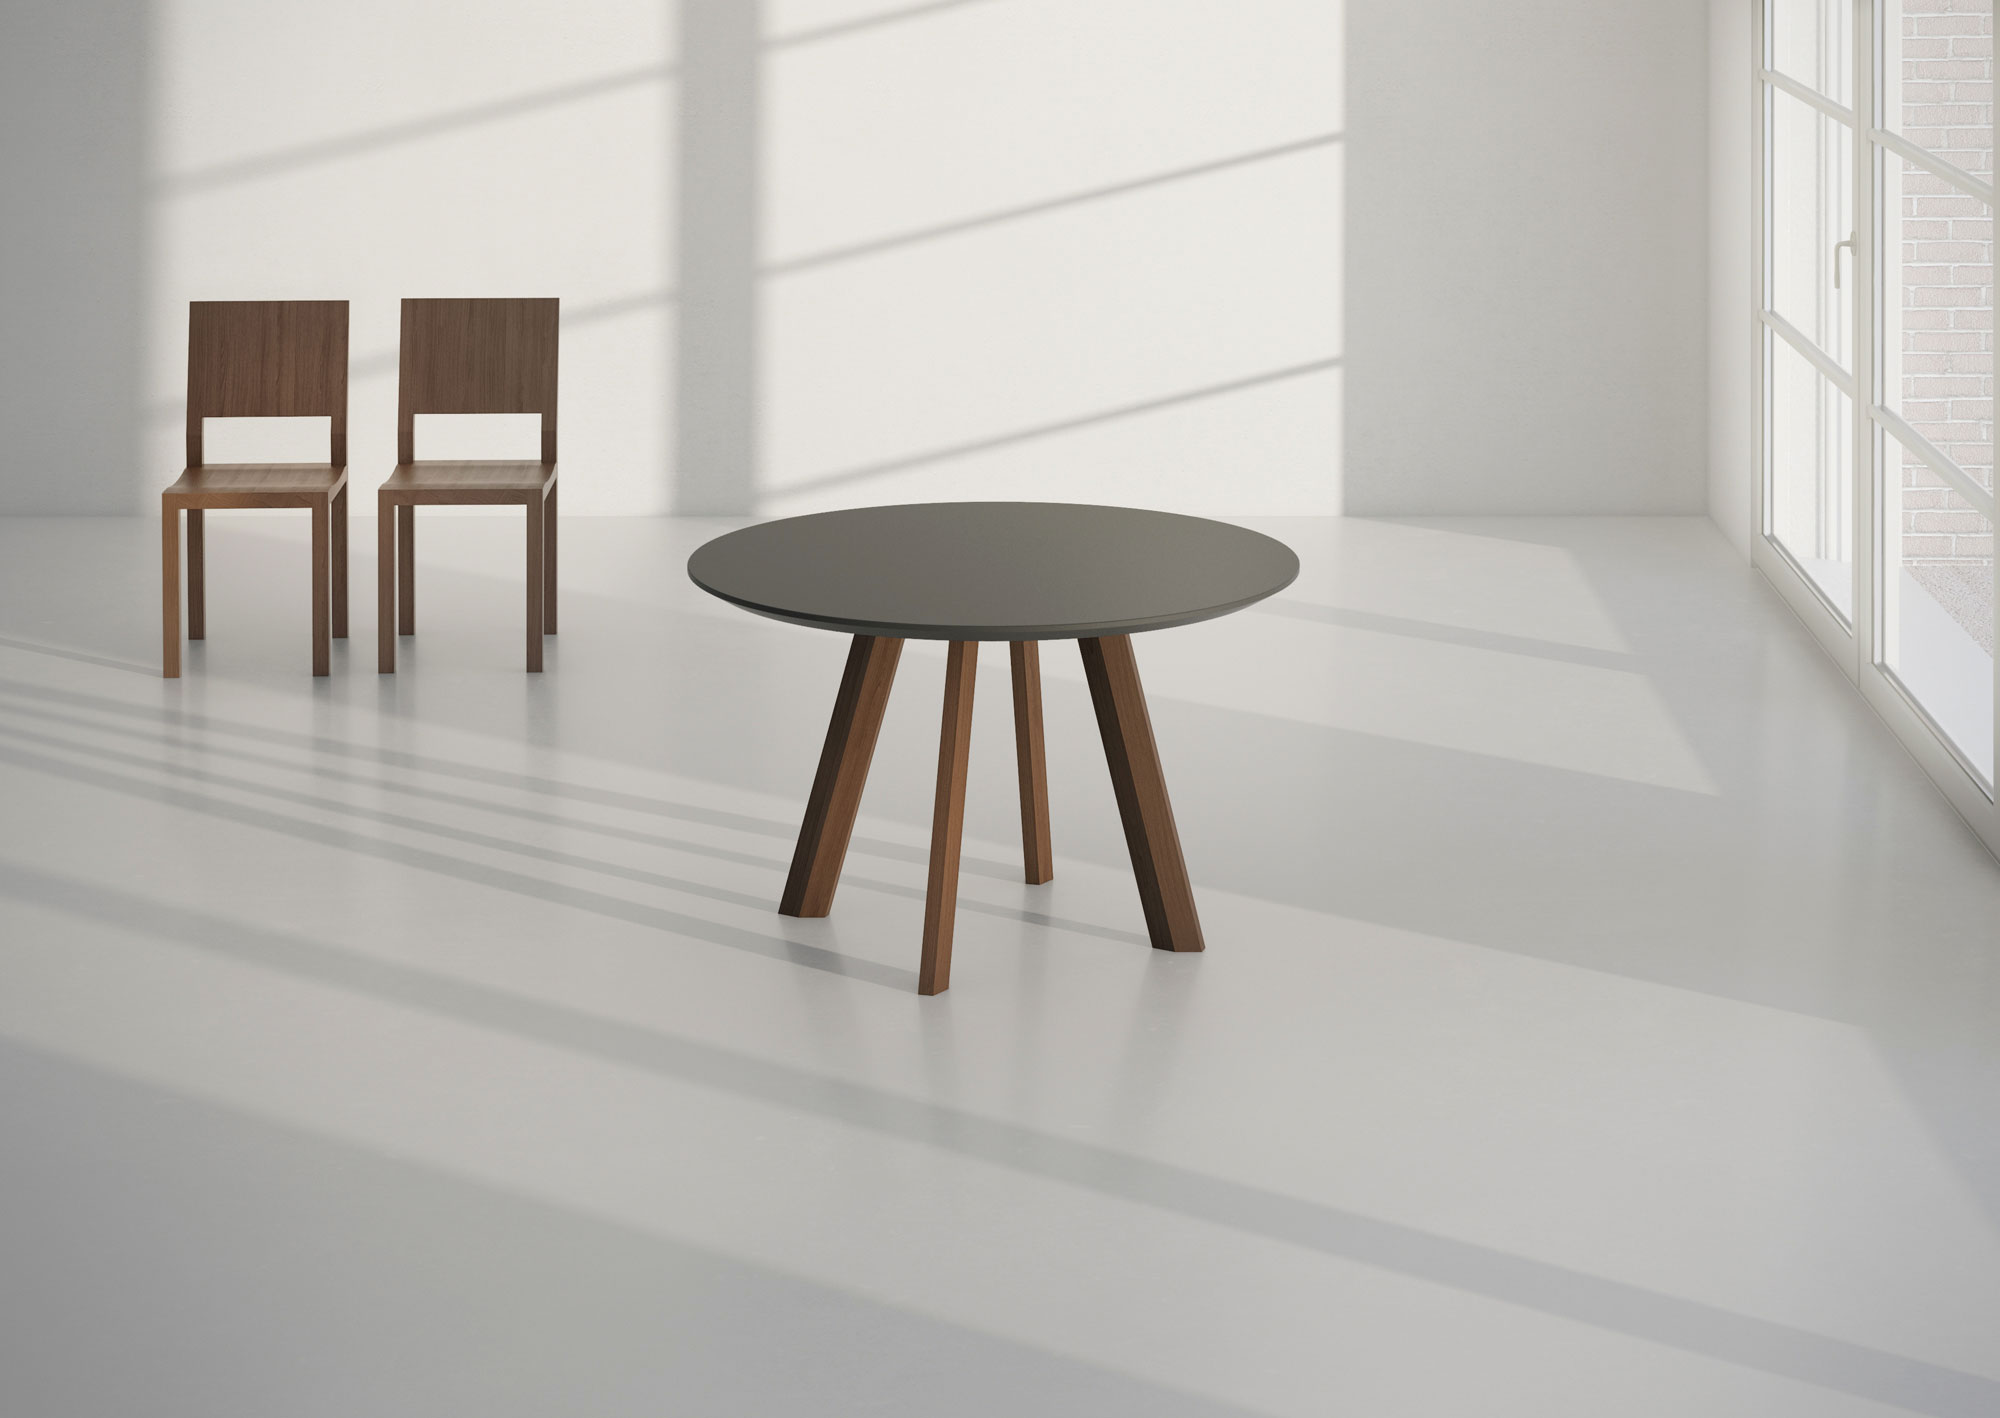 Round Linoleum Table RHOMBI ROUND LINO studio custom made in solid wood by vitamin design